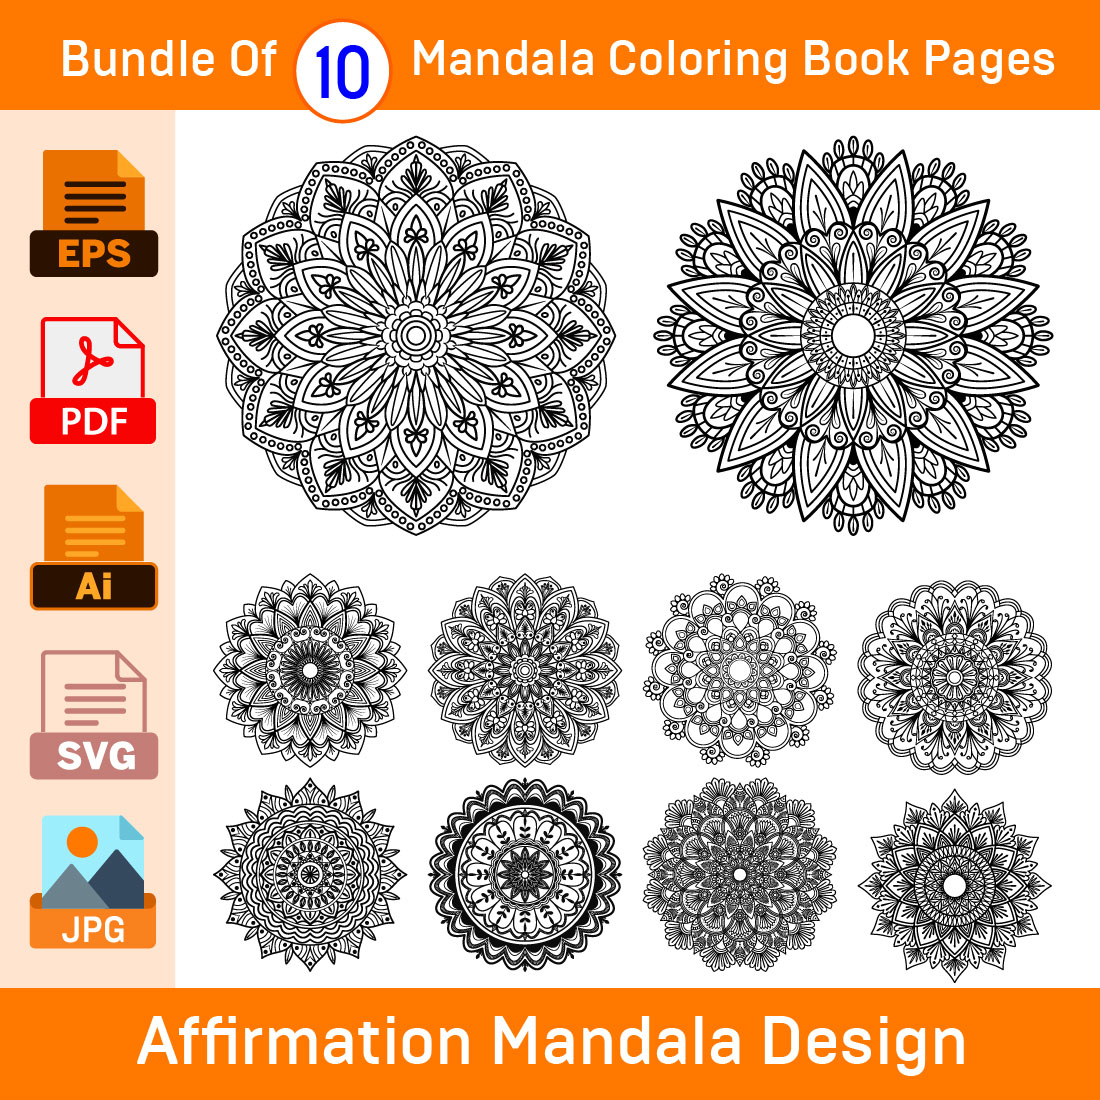 Bundle of 10 Affirmation Mandalas Coloring Book Pages cover image.